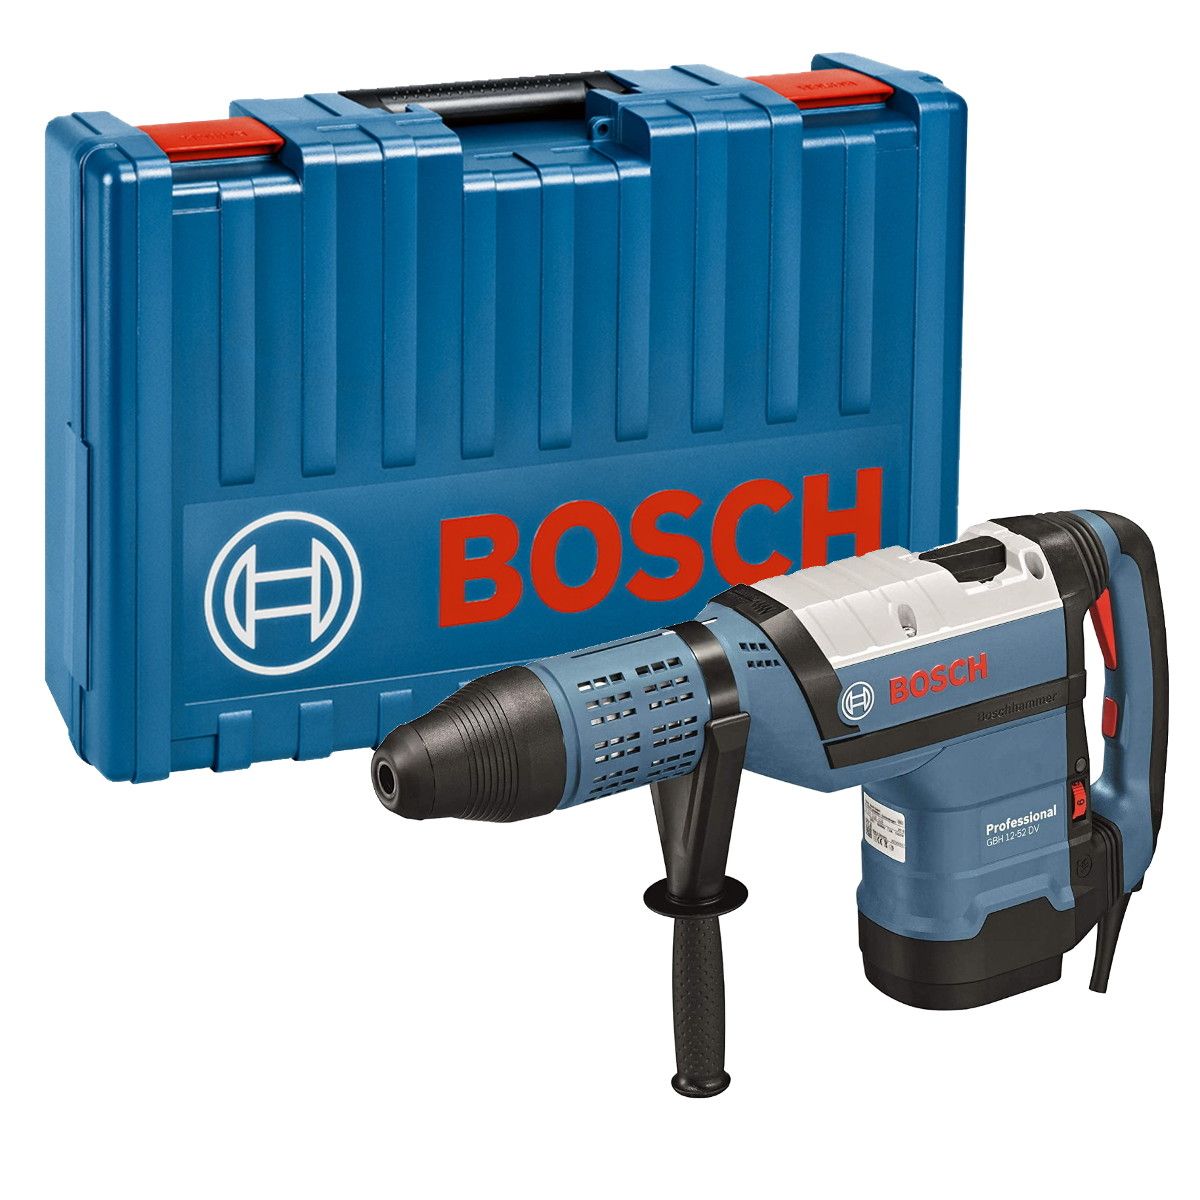 Bosch GBH 12-52 DV SDS max boorhamer met anti-vibratiehandvat 19J in koffer